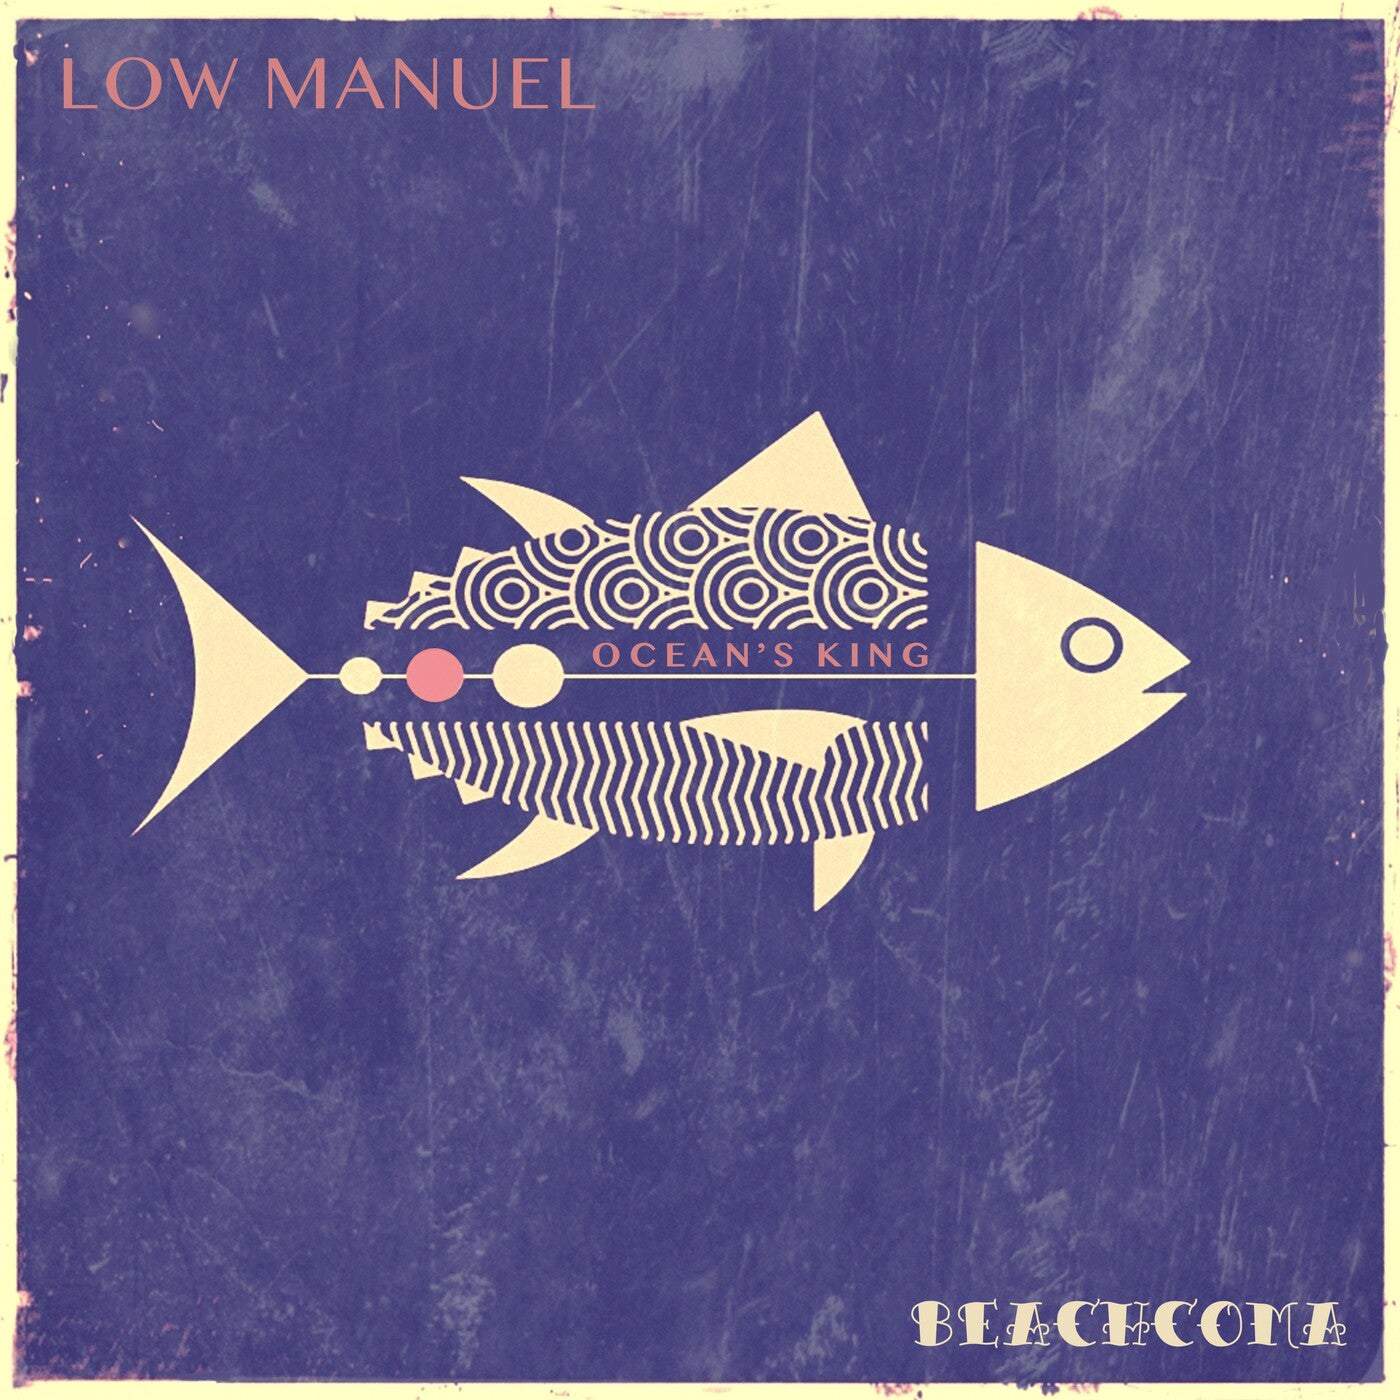 Download Low Manuel - Ocean's King on Electrobuzz